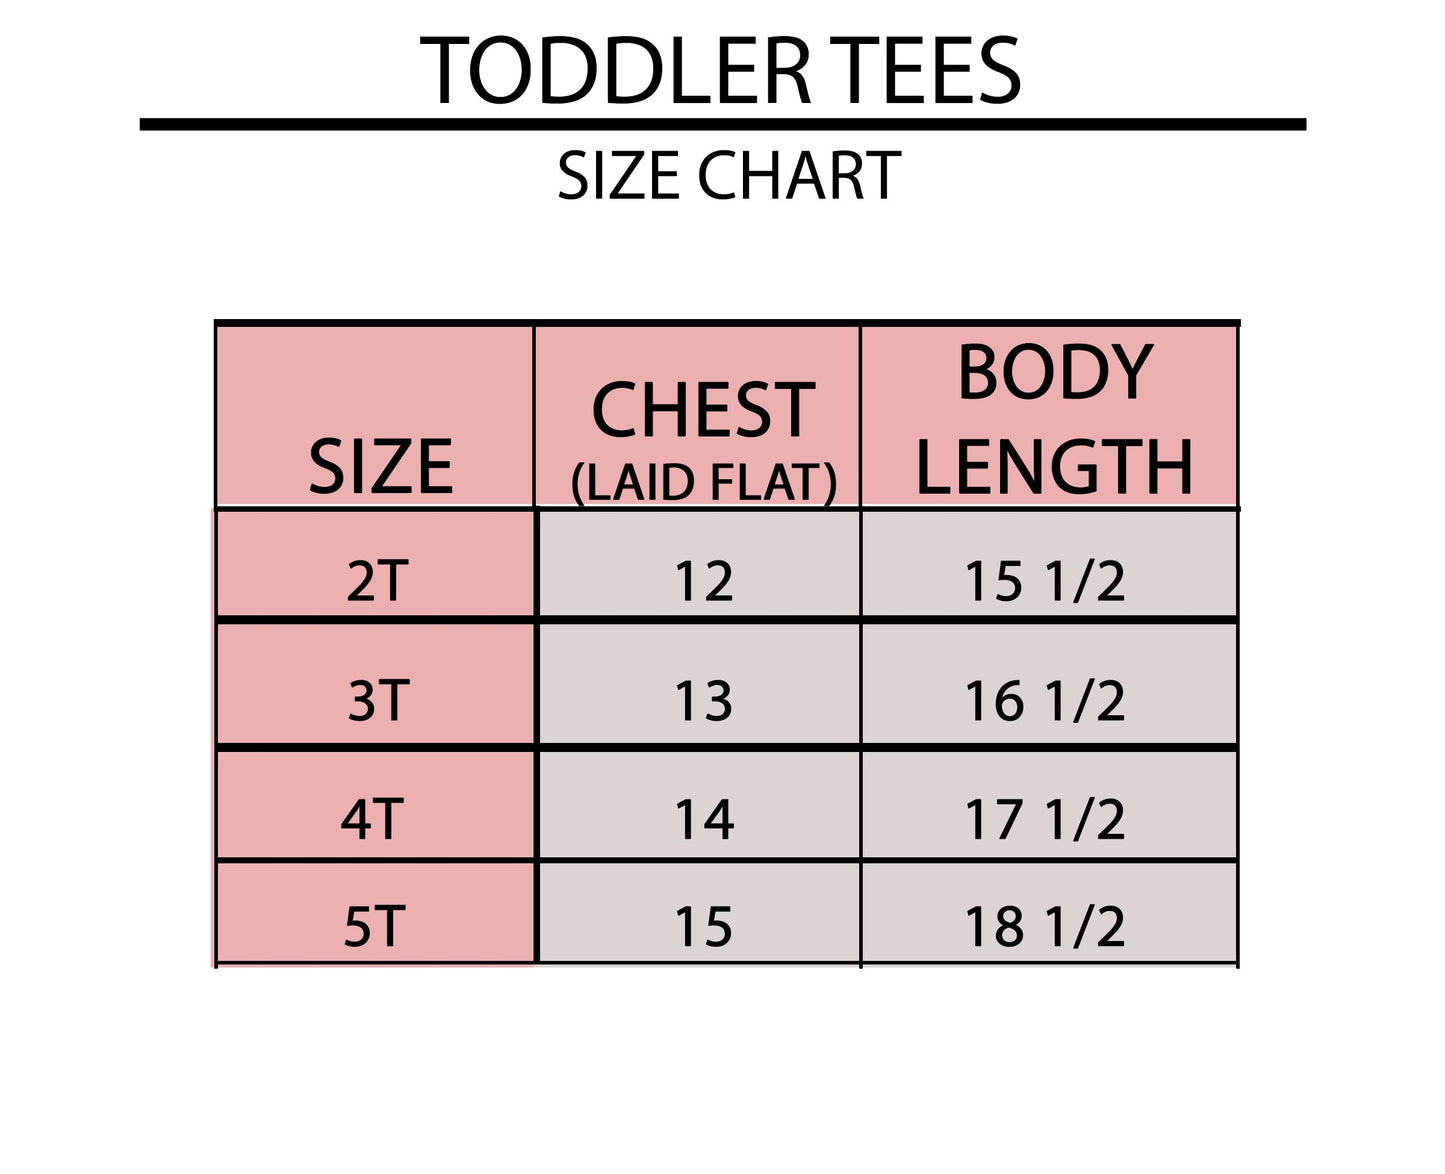 Cousin Crew Elf | Toddler Graphic Short Sleeve Tee